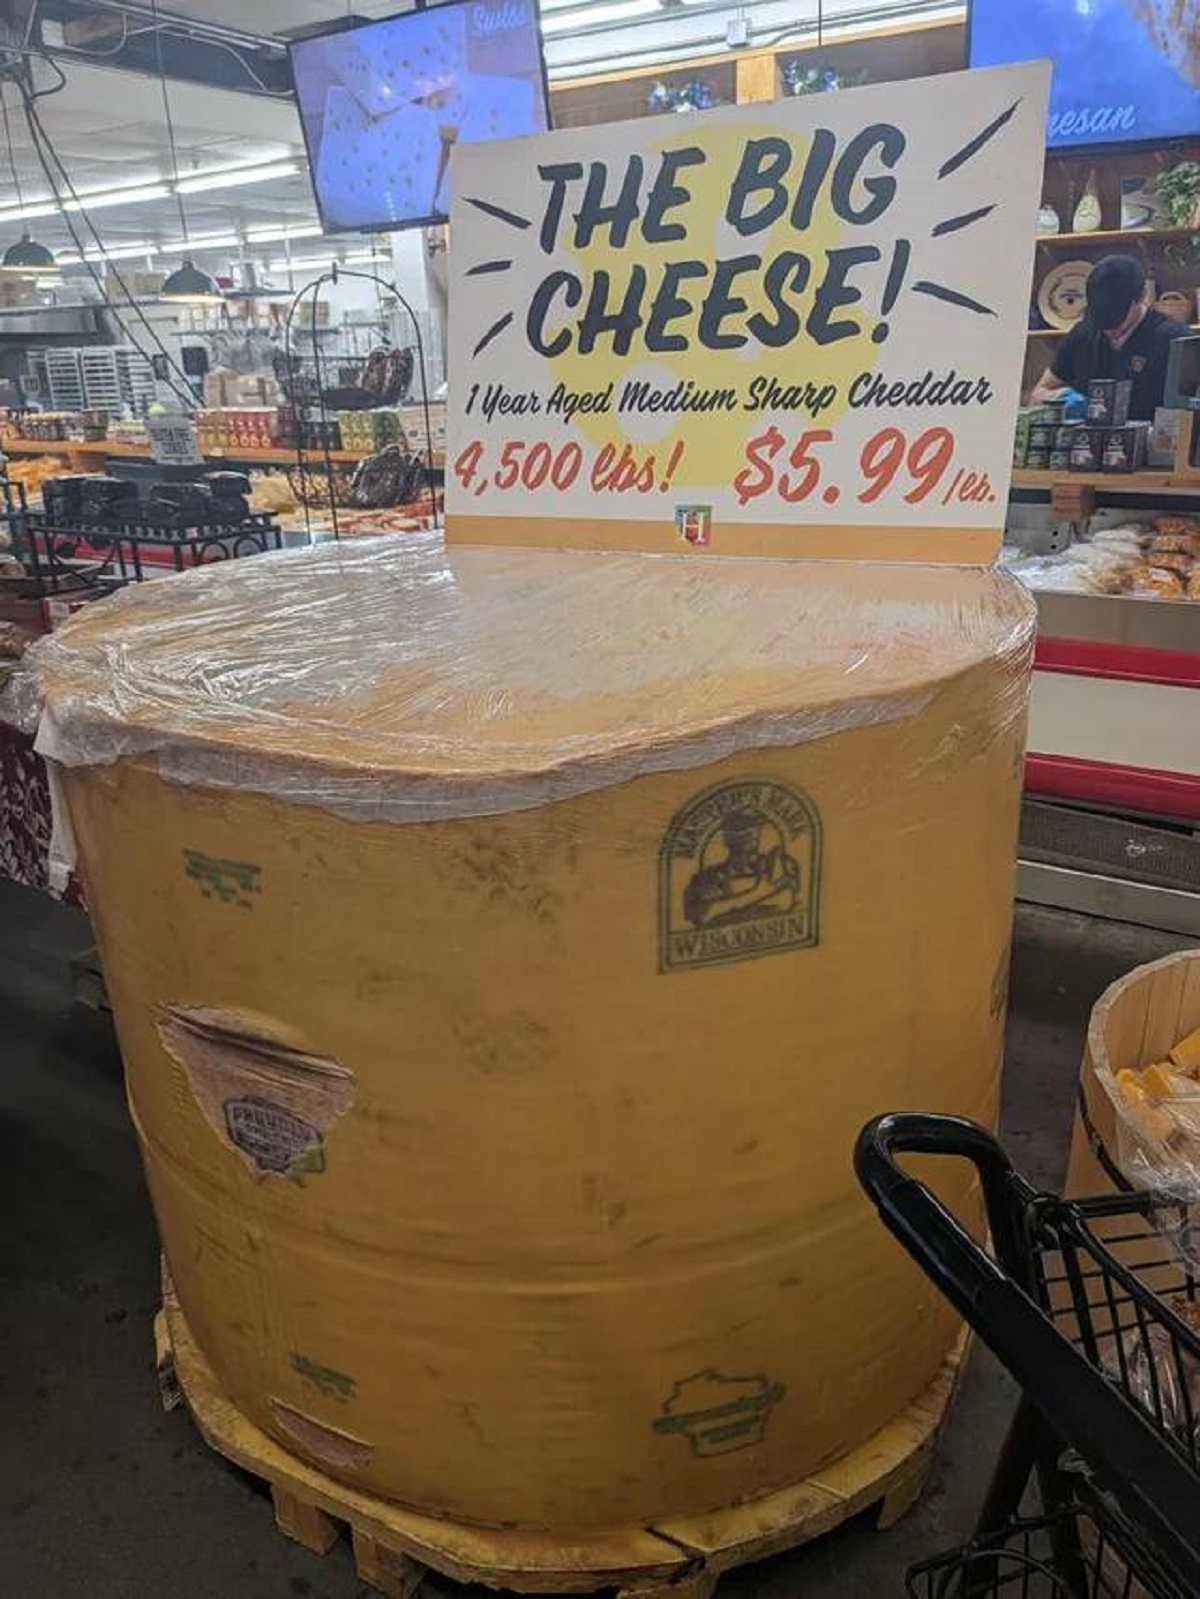 table - The Big Cheese! 1 Year Aged Medium Sharp Cheddar 4,500 lbs! $5.99 esan